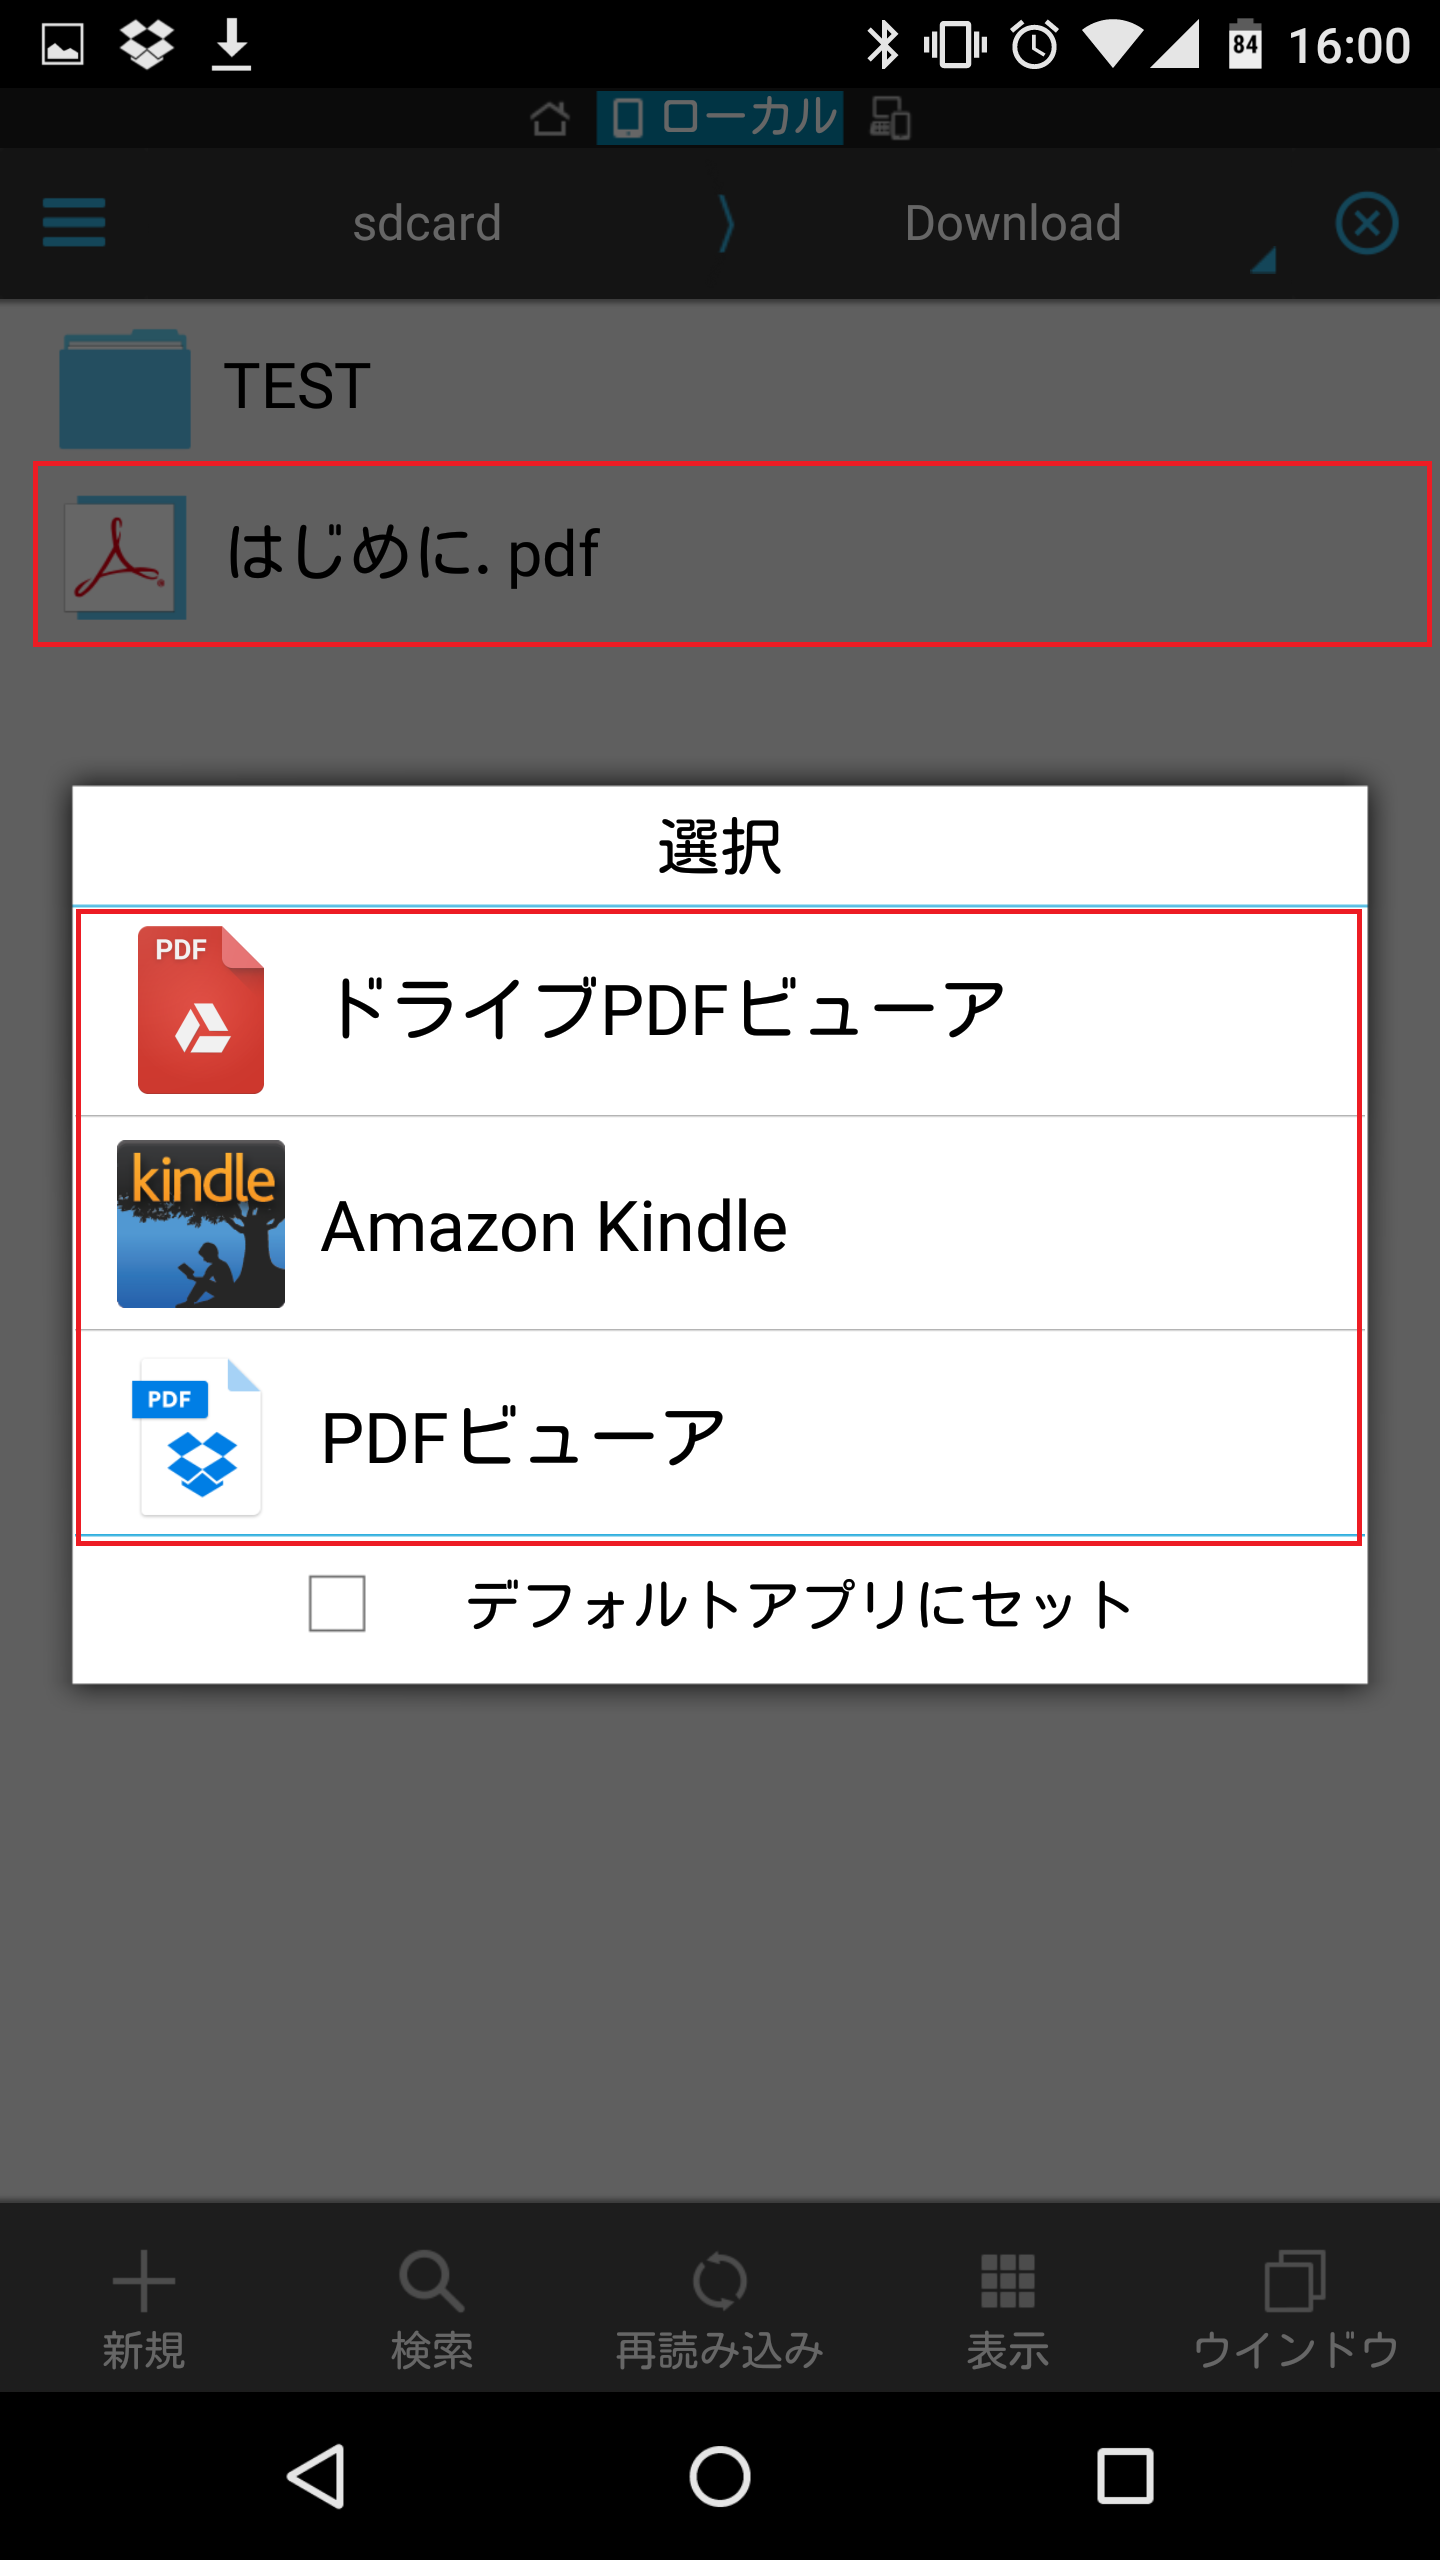 Dropbox(ドロップボックス)Android版でフォルダを共有する方法とフォルダ内のファイルをダウンロードする方法。 - アンドロイドラバー